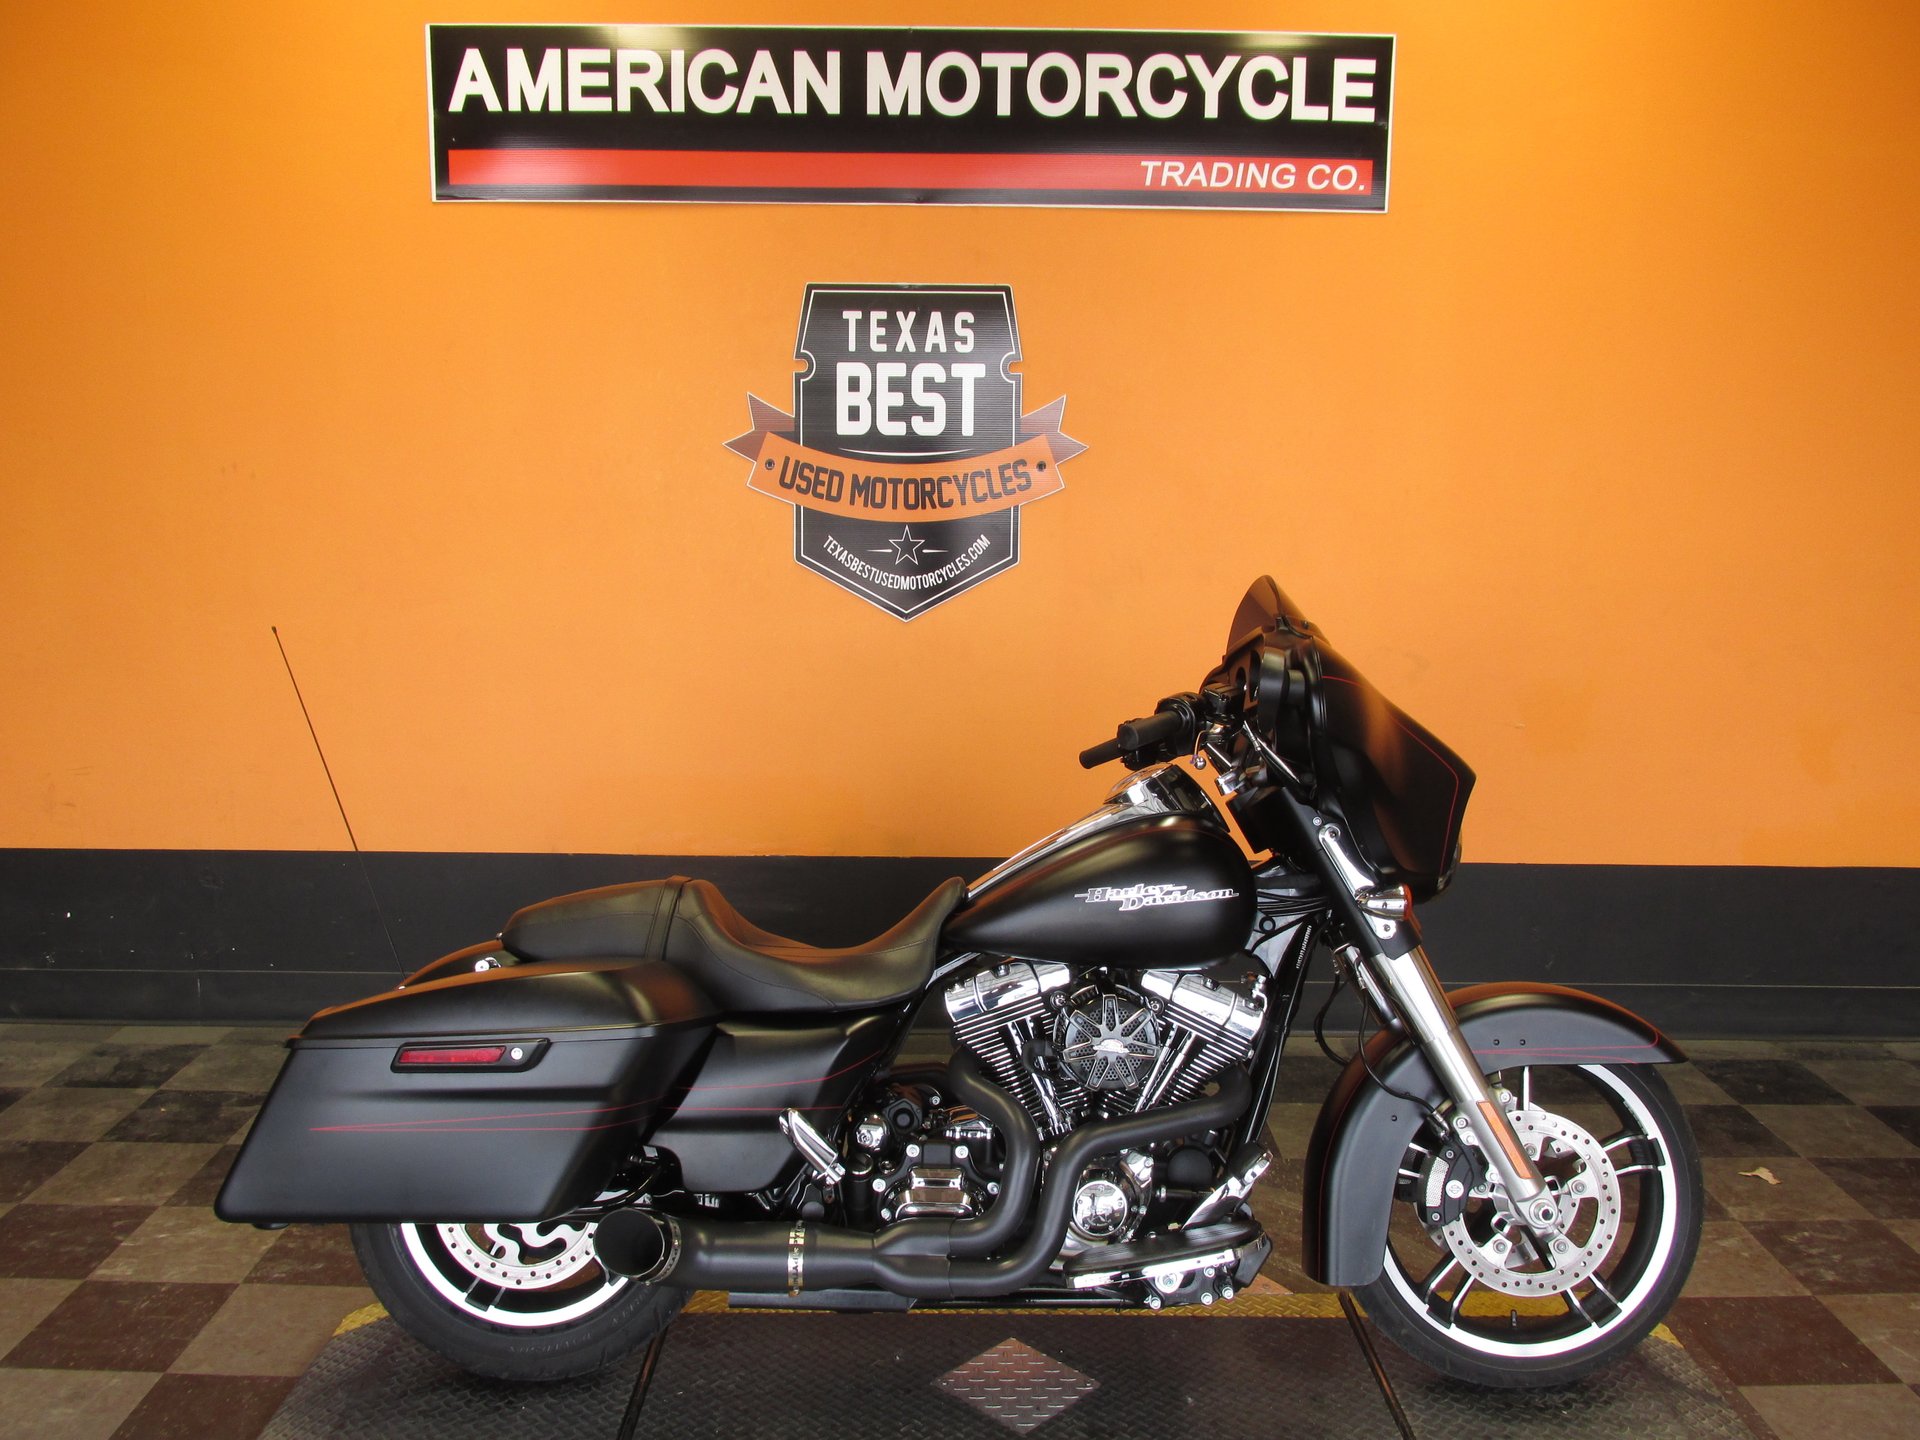 2015 Harley-Davidson Street Glide  American Motorcycle Trading Company -  Used Harley Davidson Motorcycles